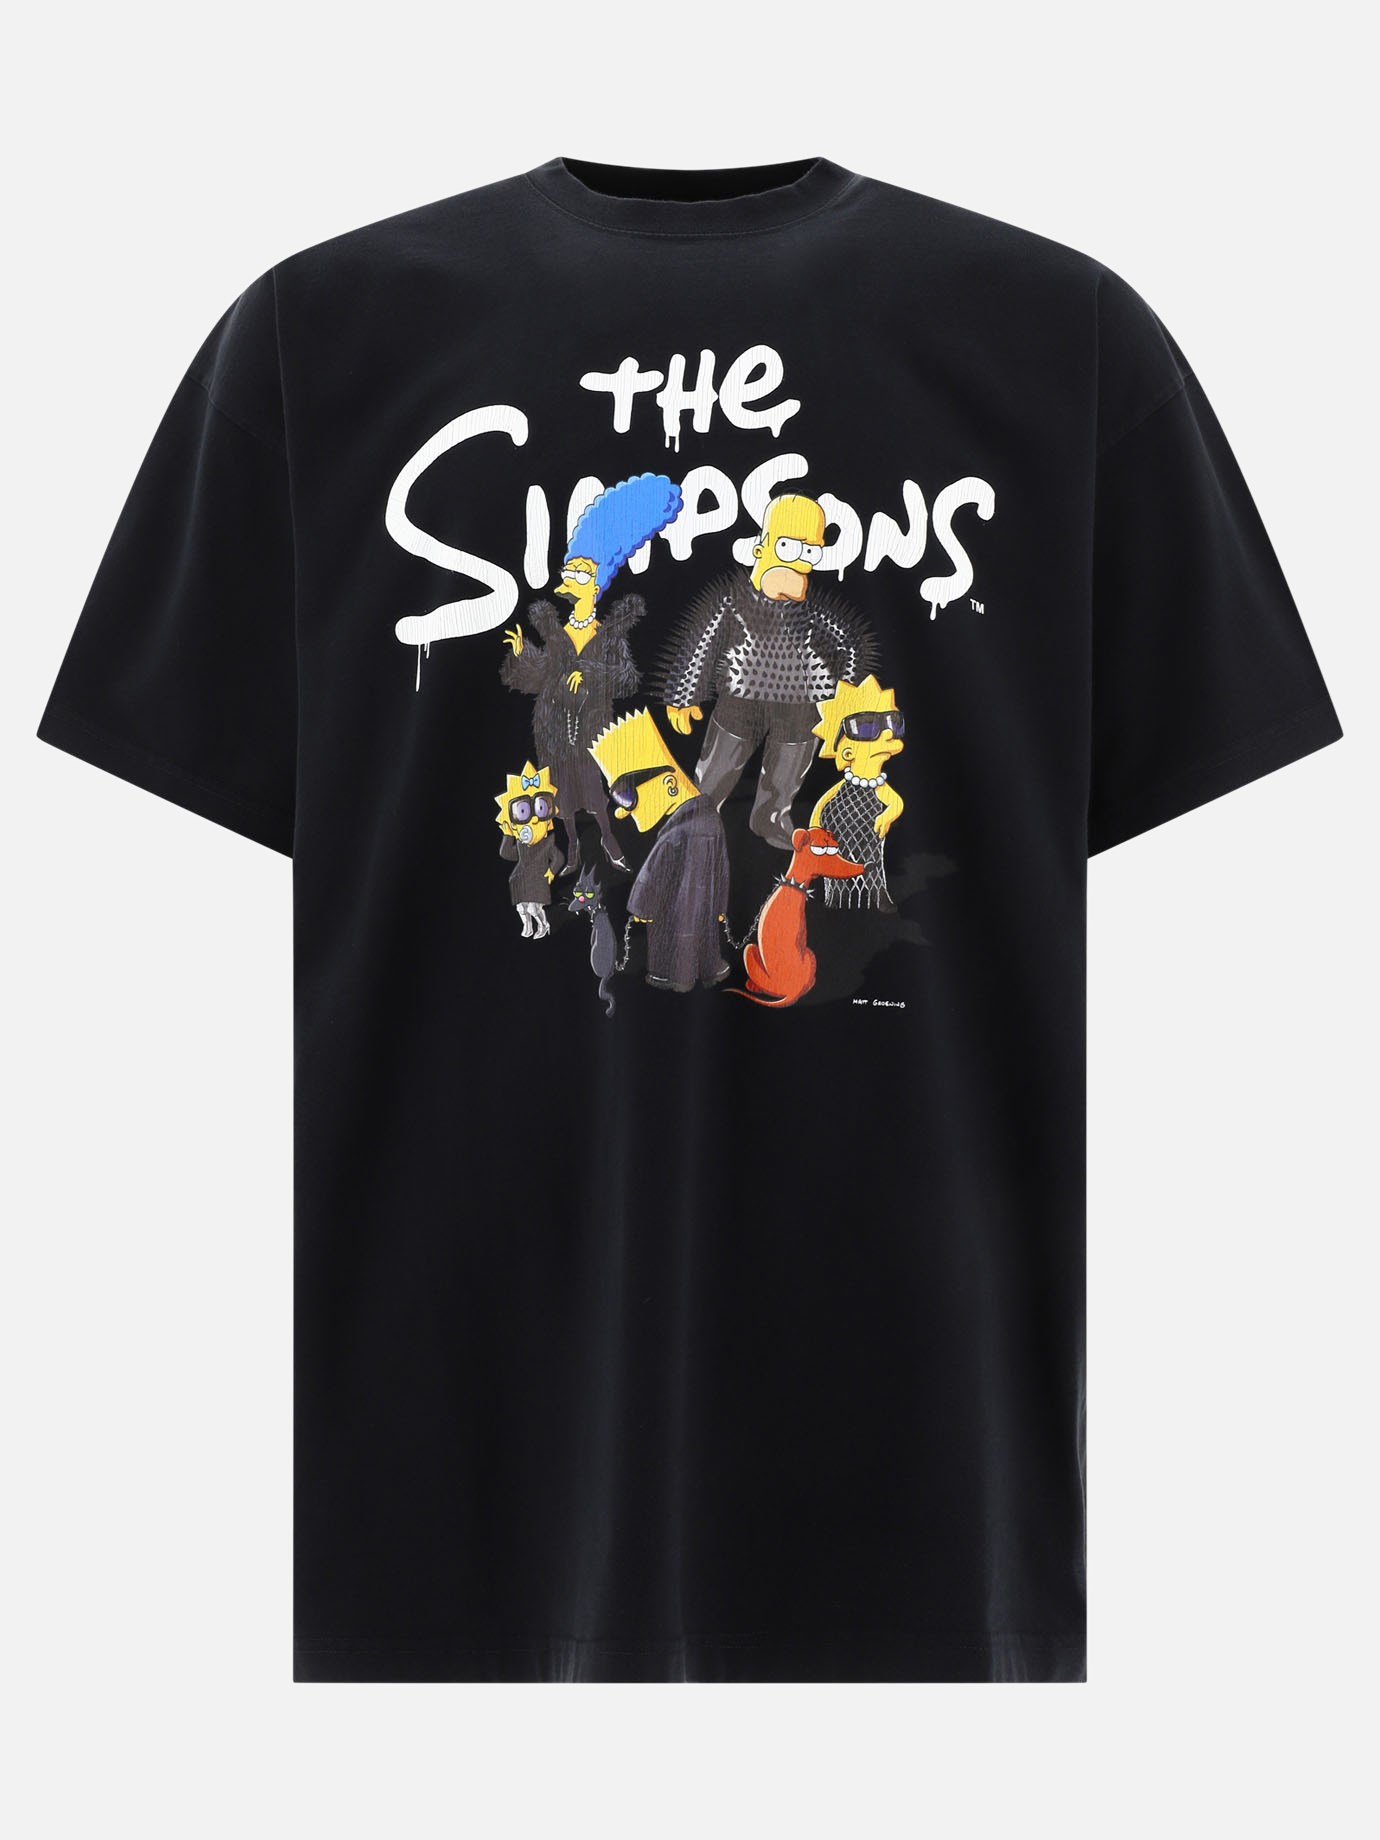  The Simpsons  t-shirt by Balenciaga